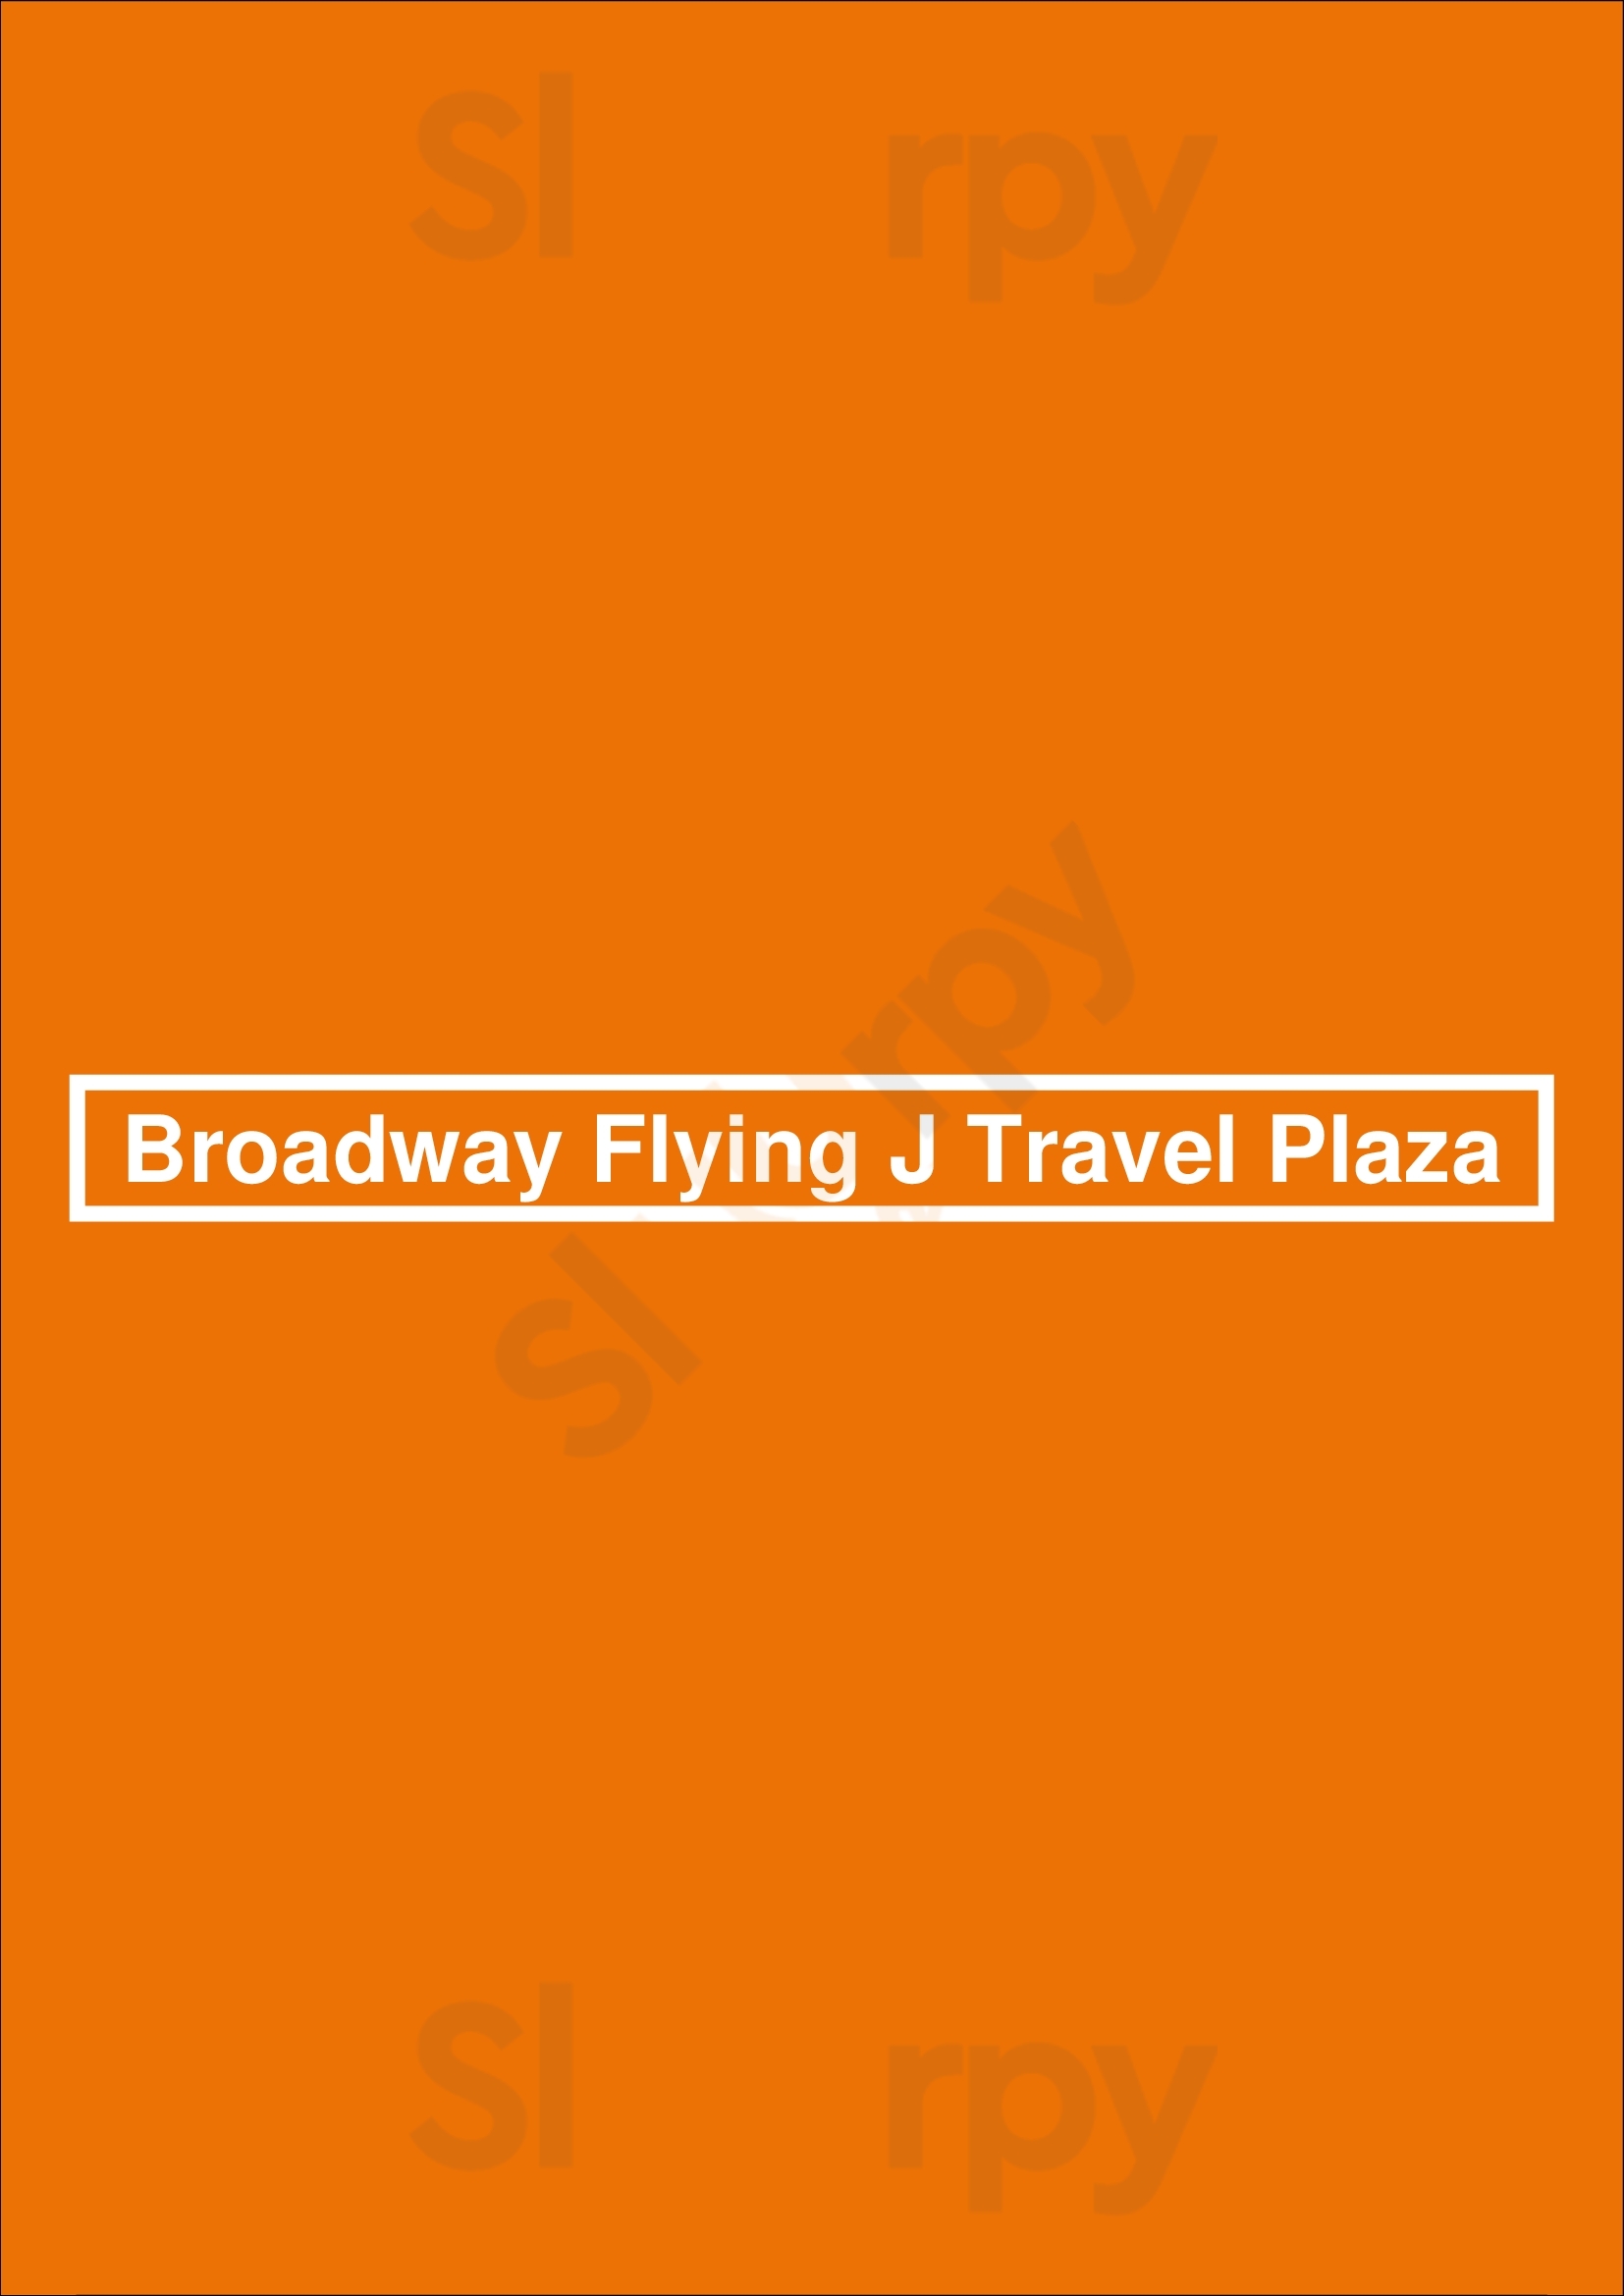 Broadway Flying J Travel Plaza Spokane Menu - 1